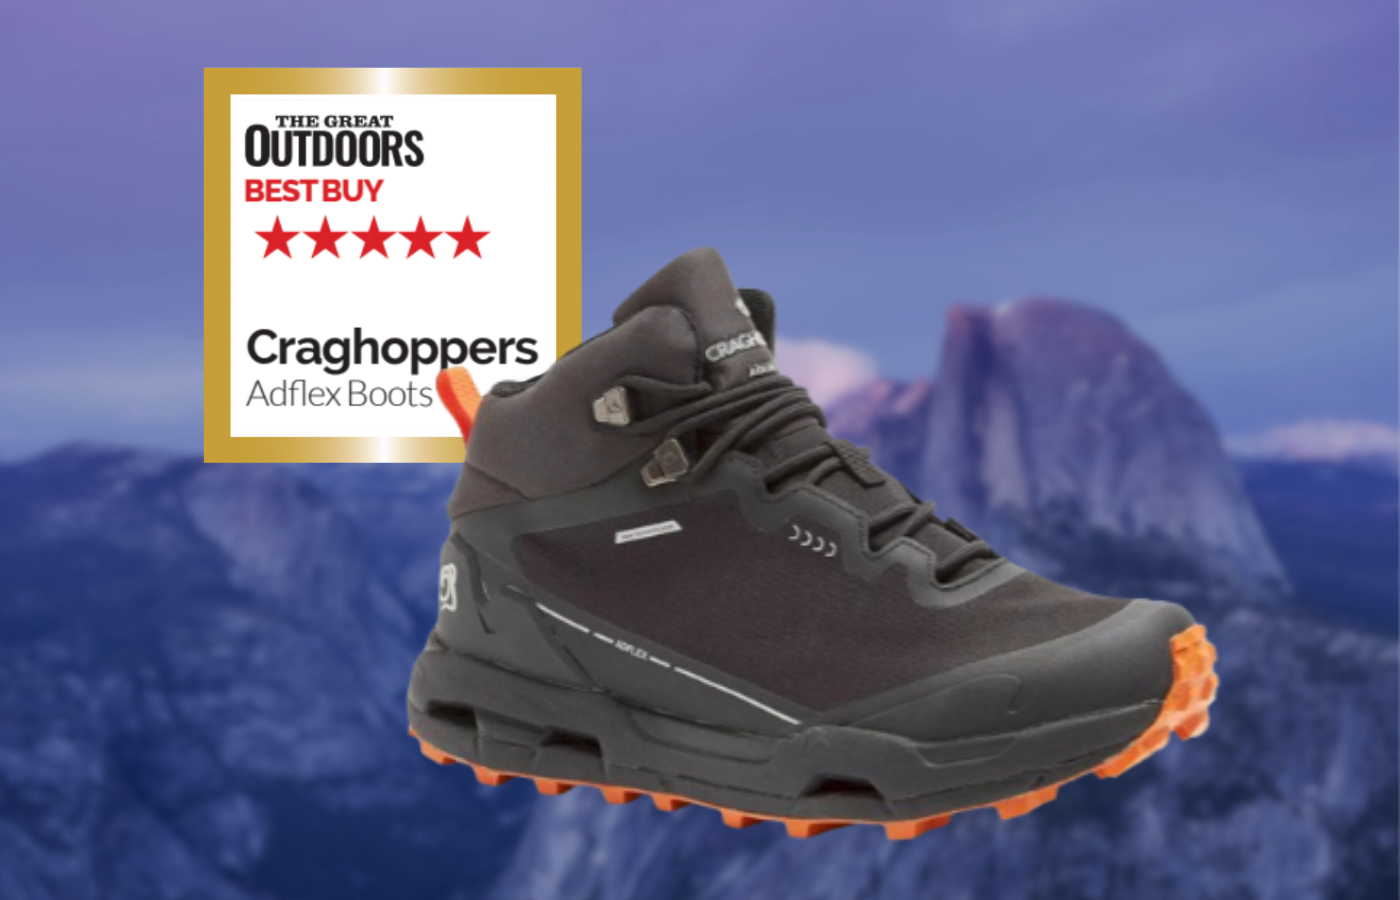 Craghoppers Adflex Boots Review | TGO Magazine